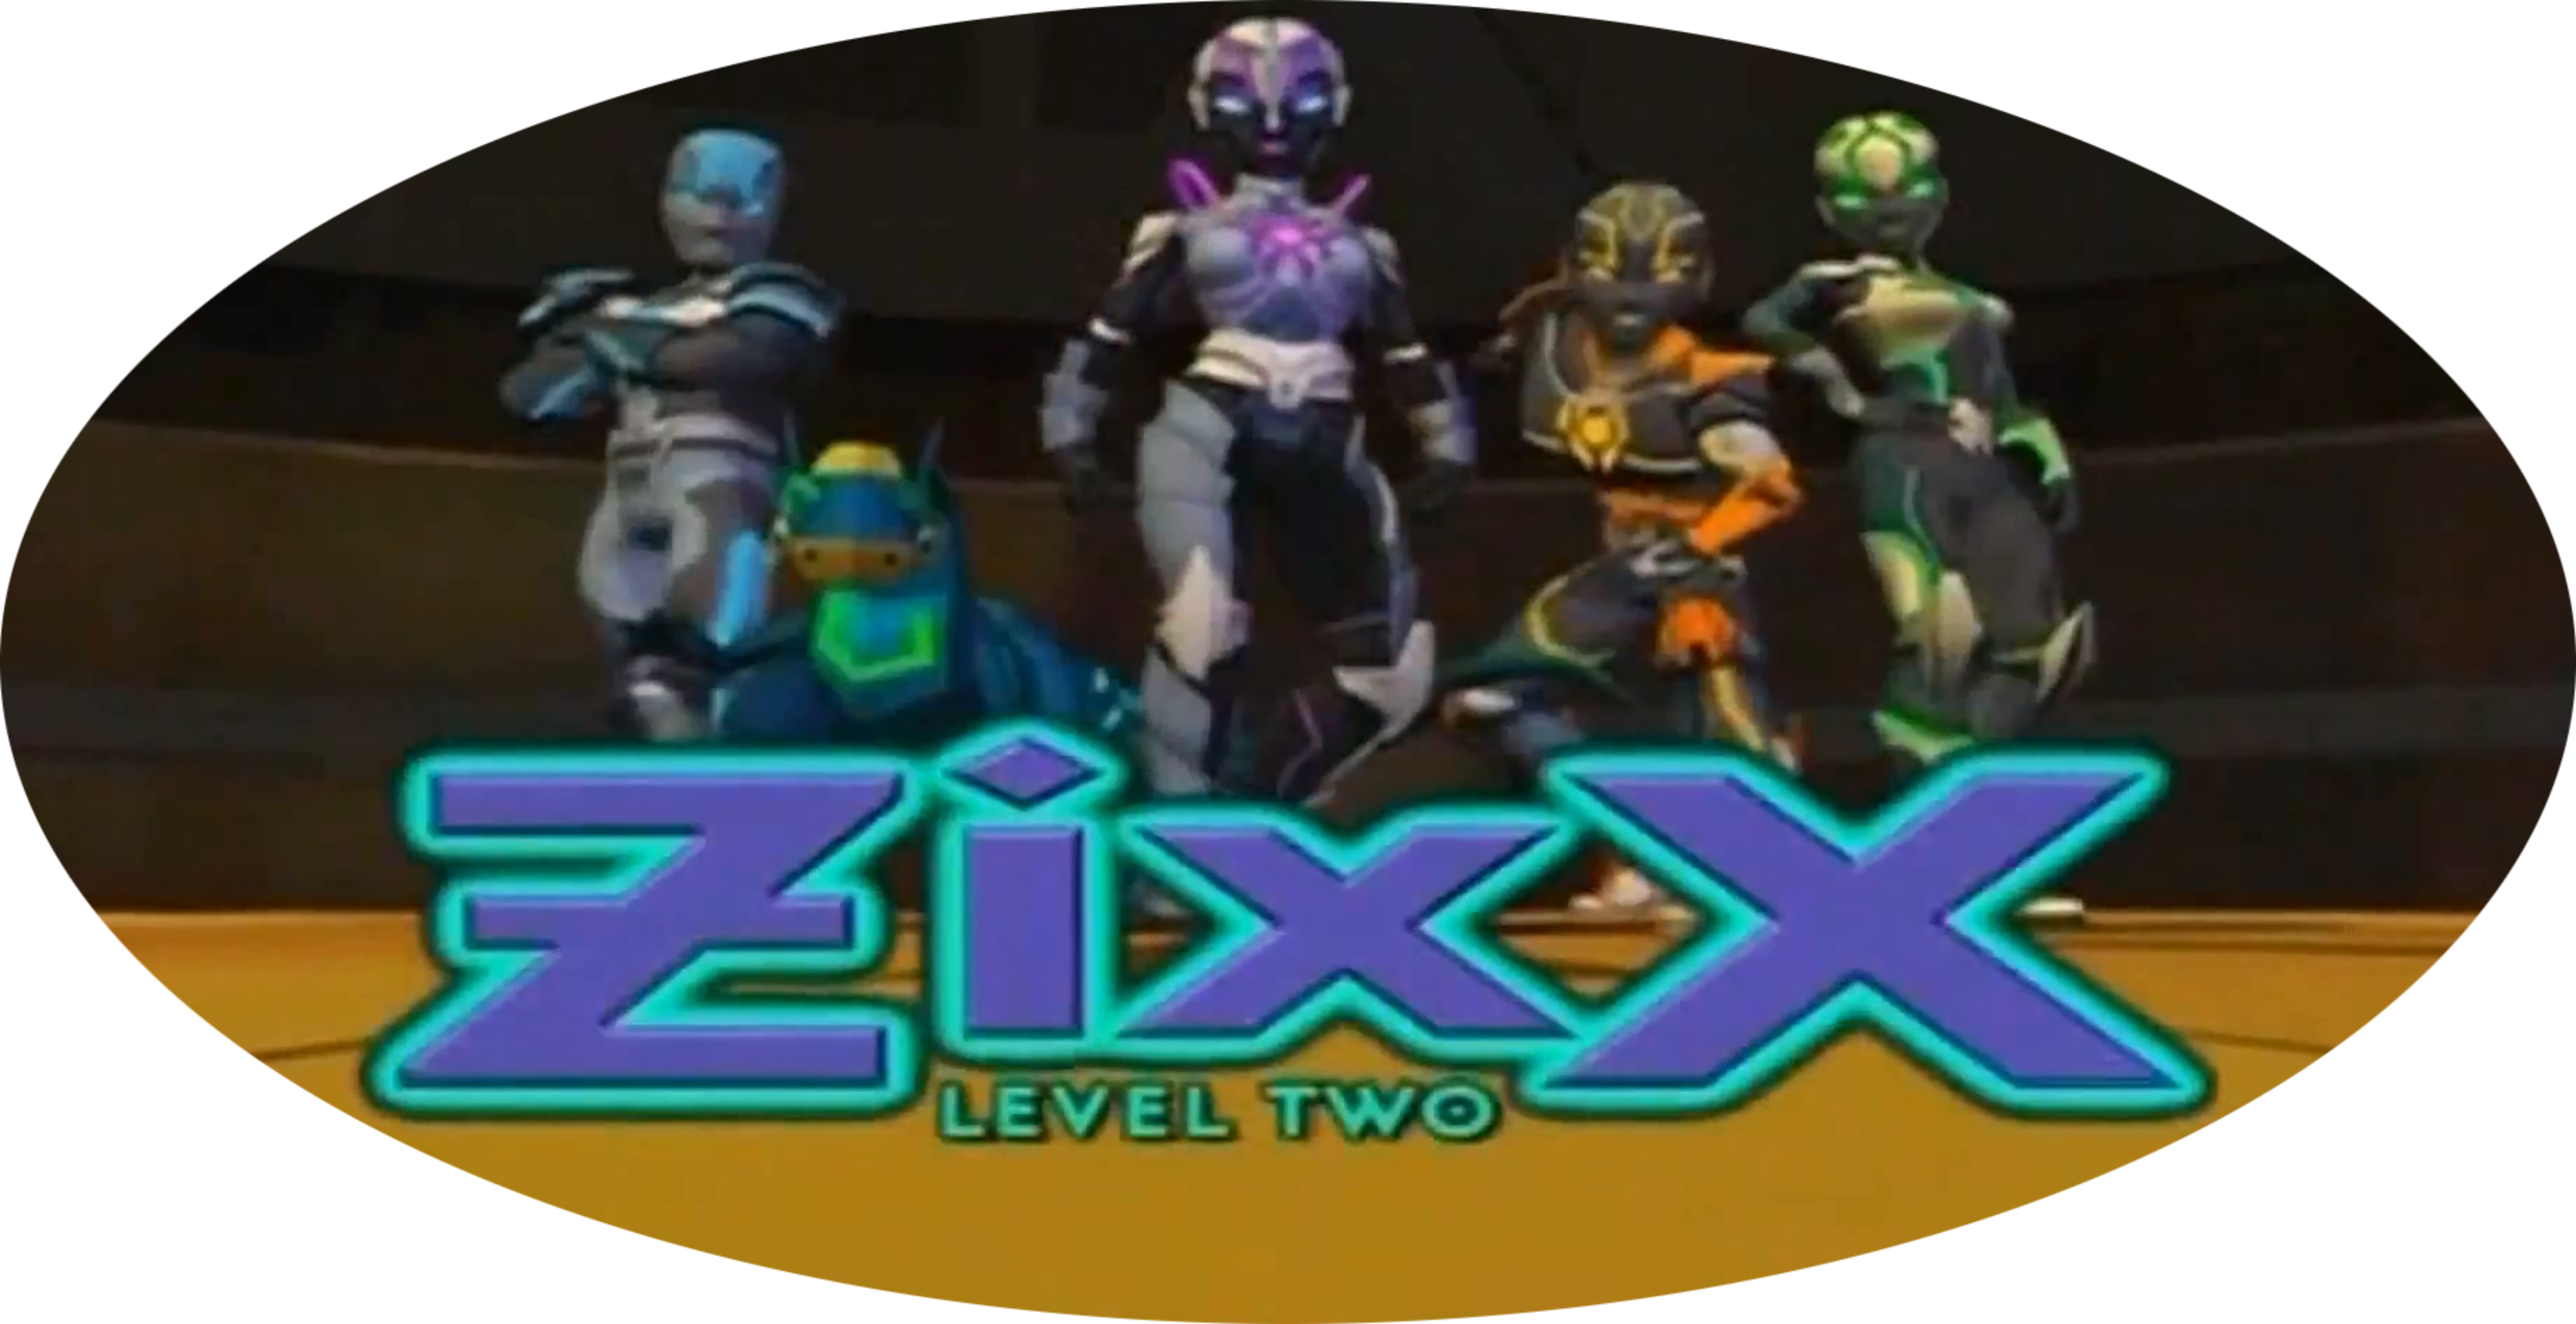 Zixx Level Two (1 DVD Box Set)